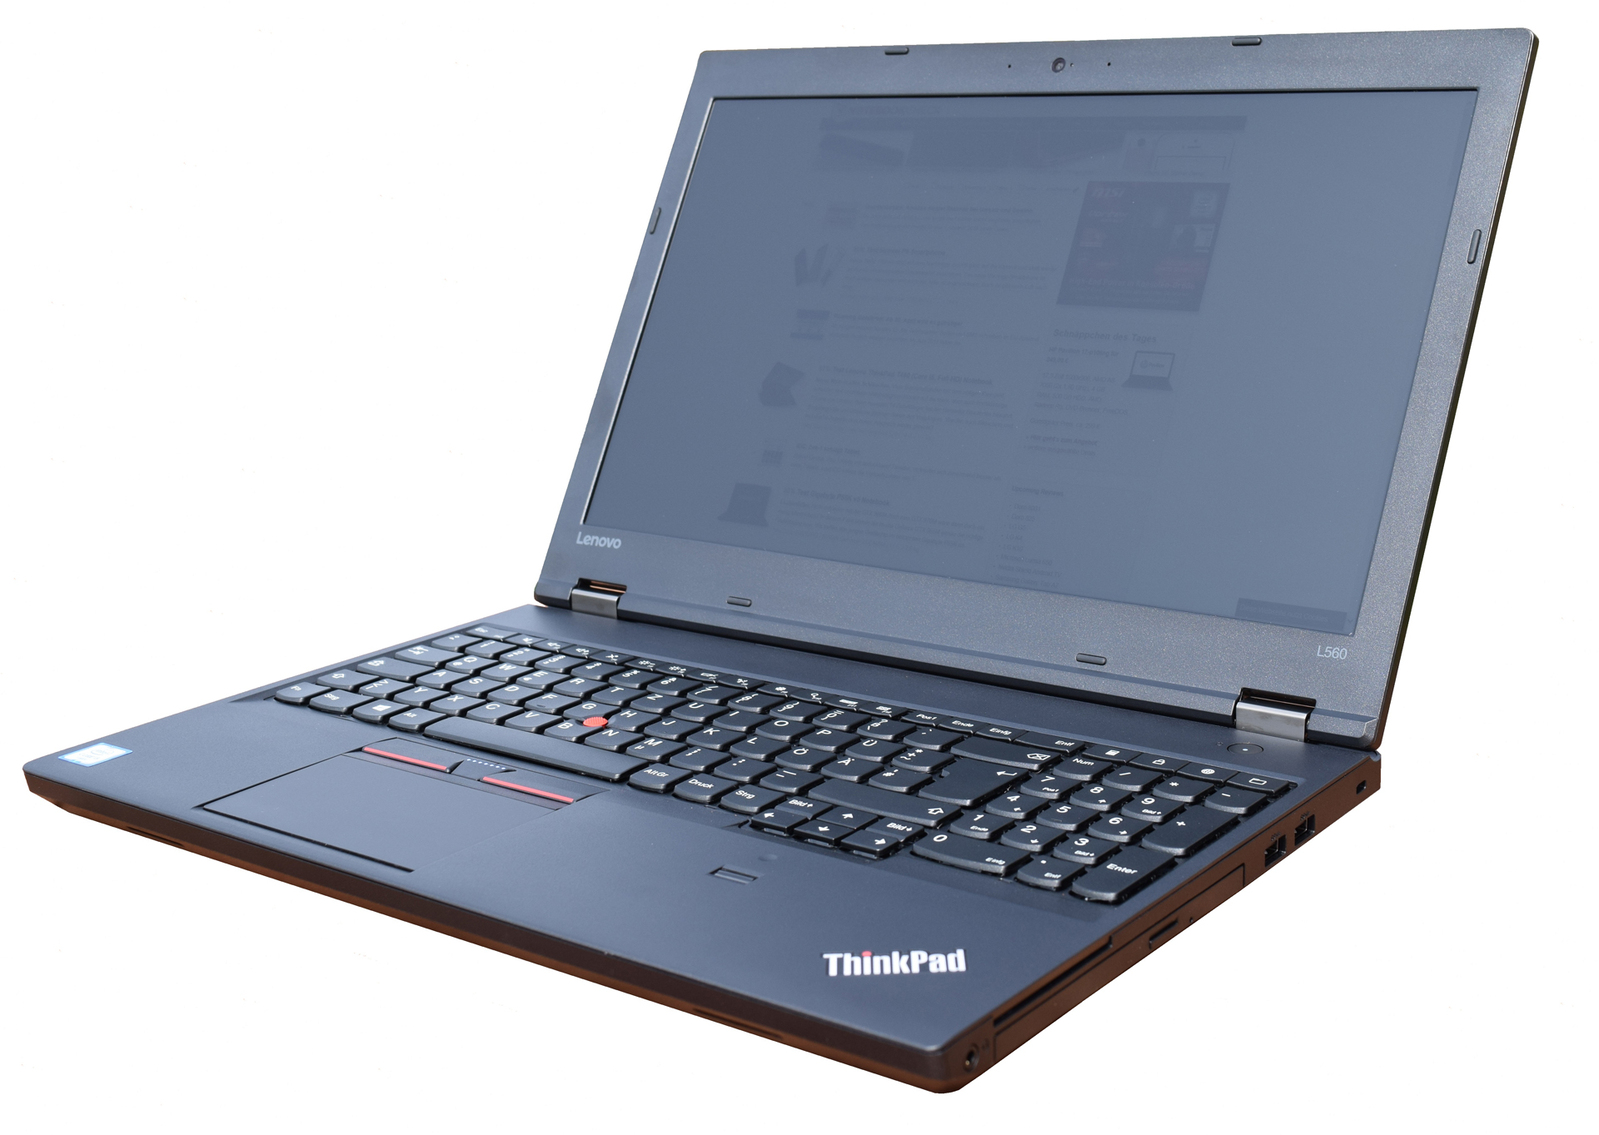 Lenovo ThinkPad L560 Intel i5 6200U 2.30GHz 4GB RAM 500GB HDD 15.6" Win 10 Image 2